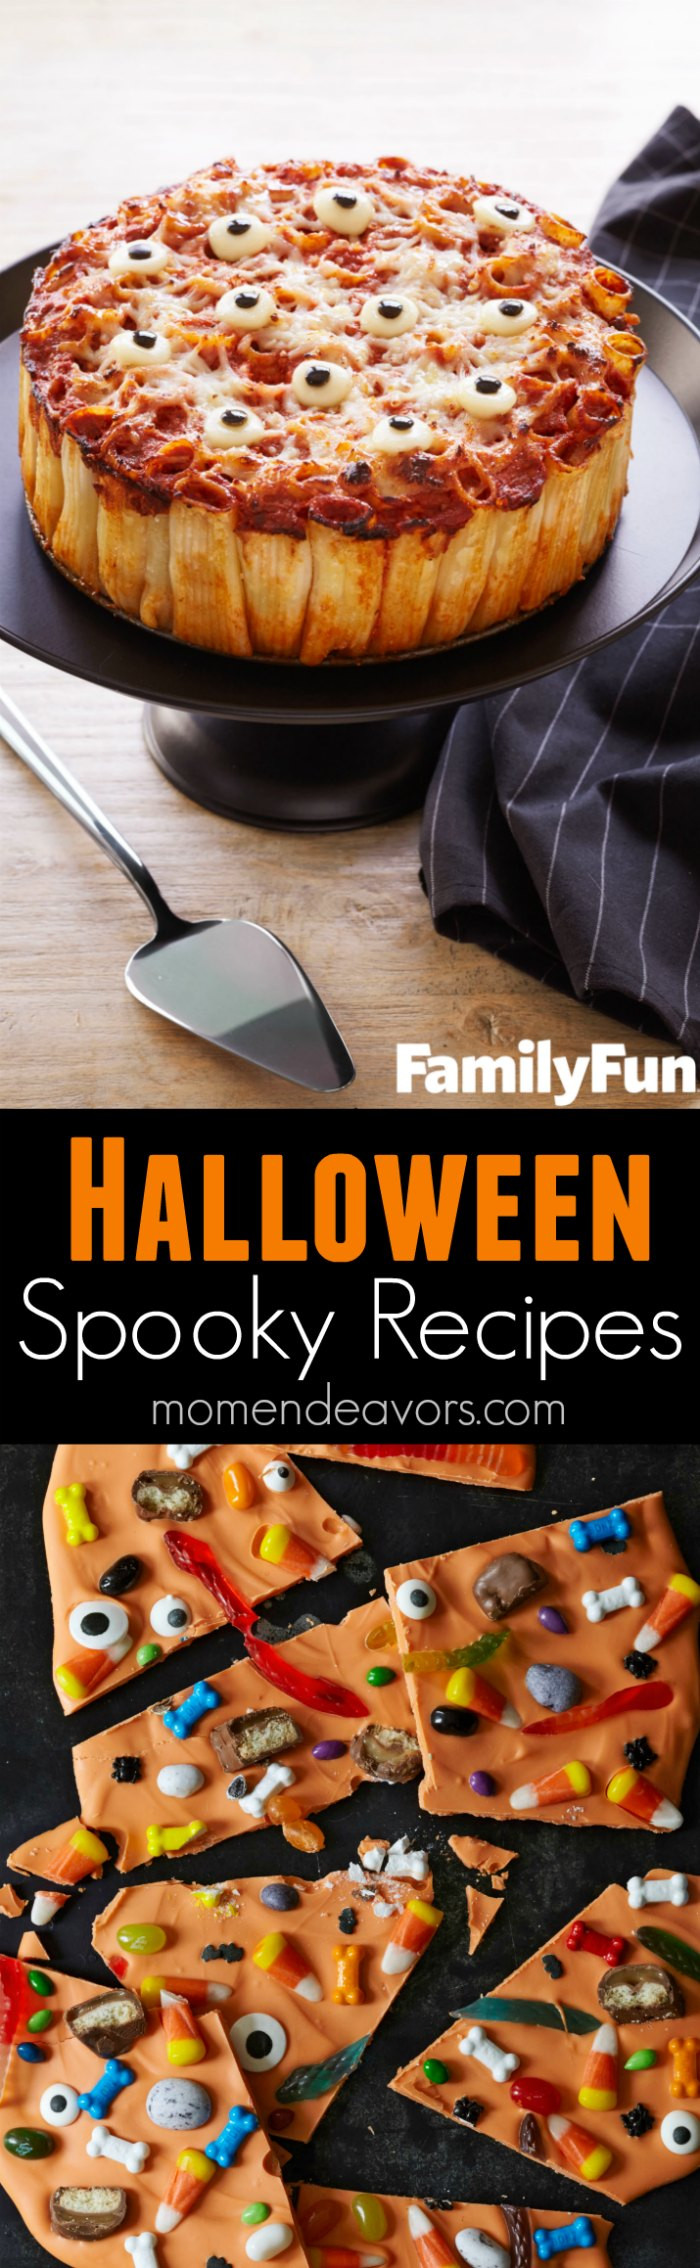 Halloween Party Recipe Ideas
 Spooky Halloween Party Recipes